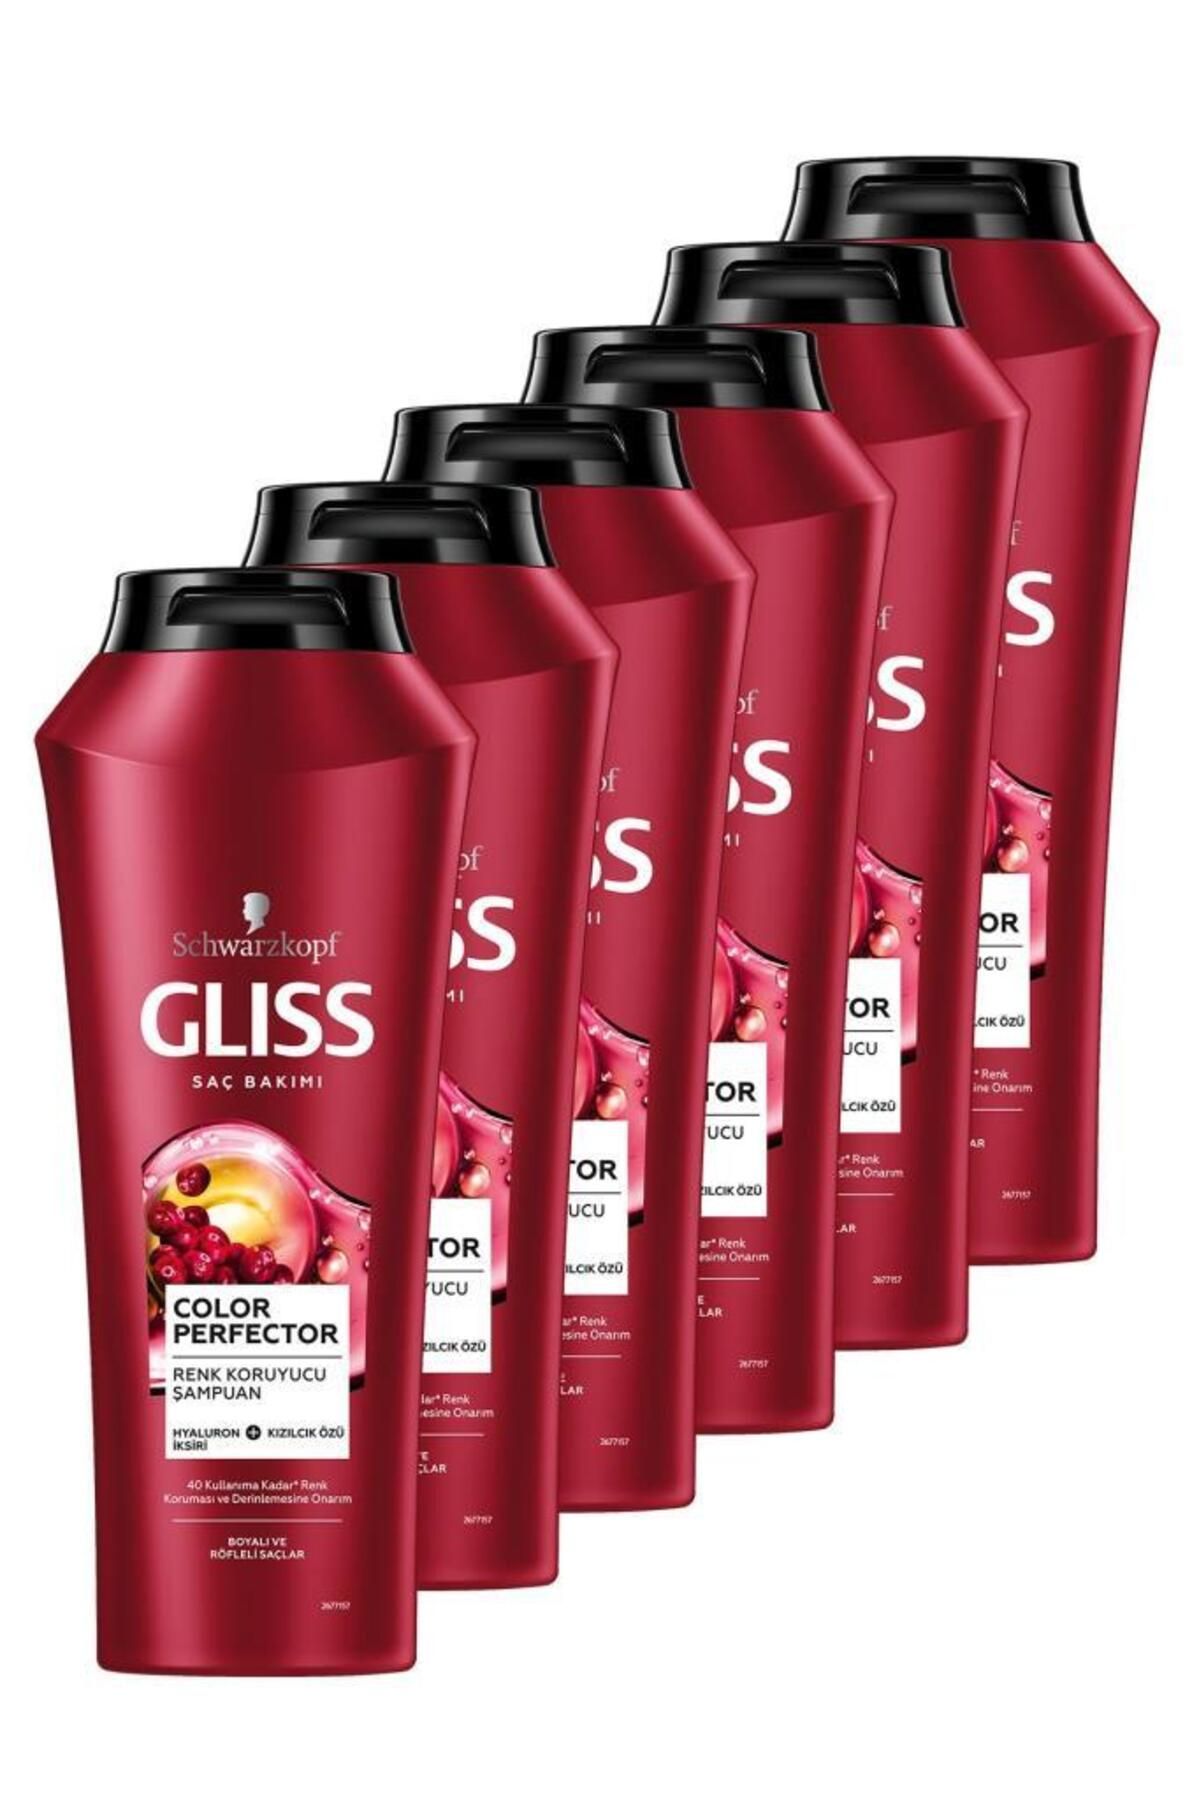 Gliss Glıss Color Perfector Renk Koruyucu Şampuan 500 ml X 6 Adet